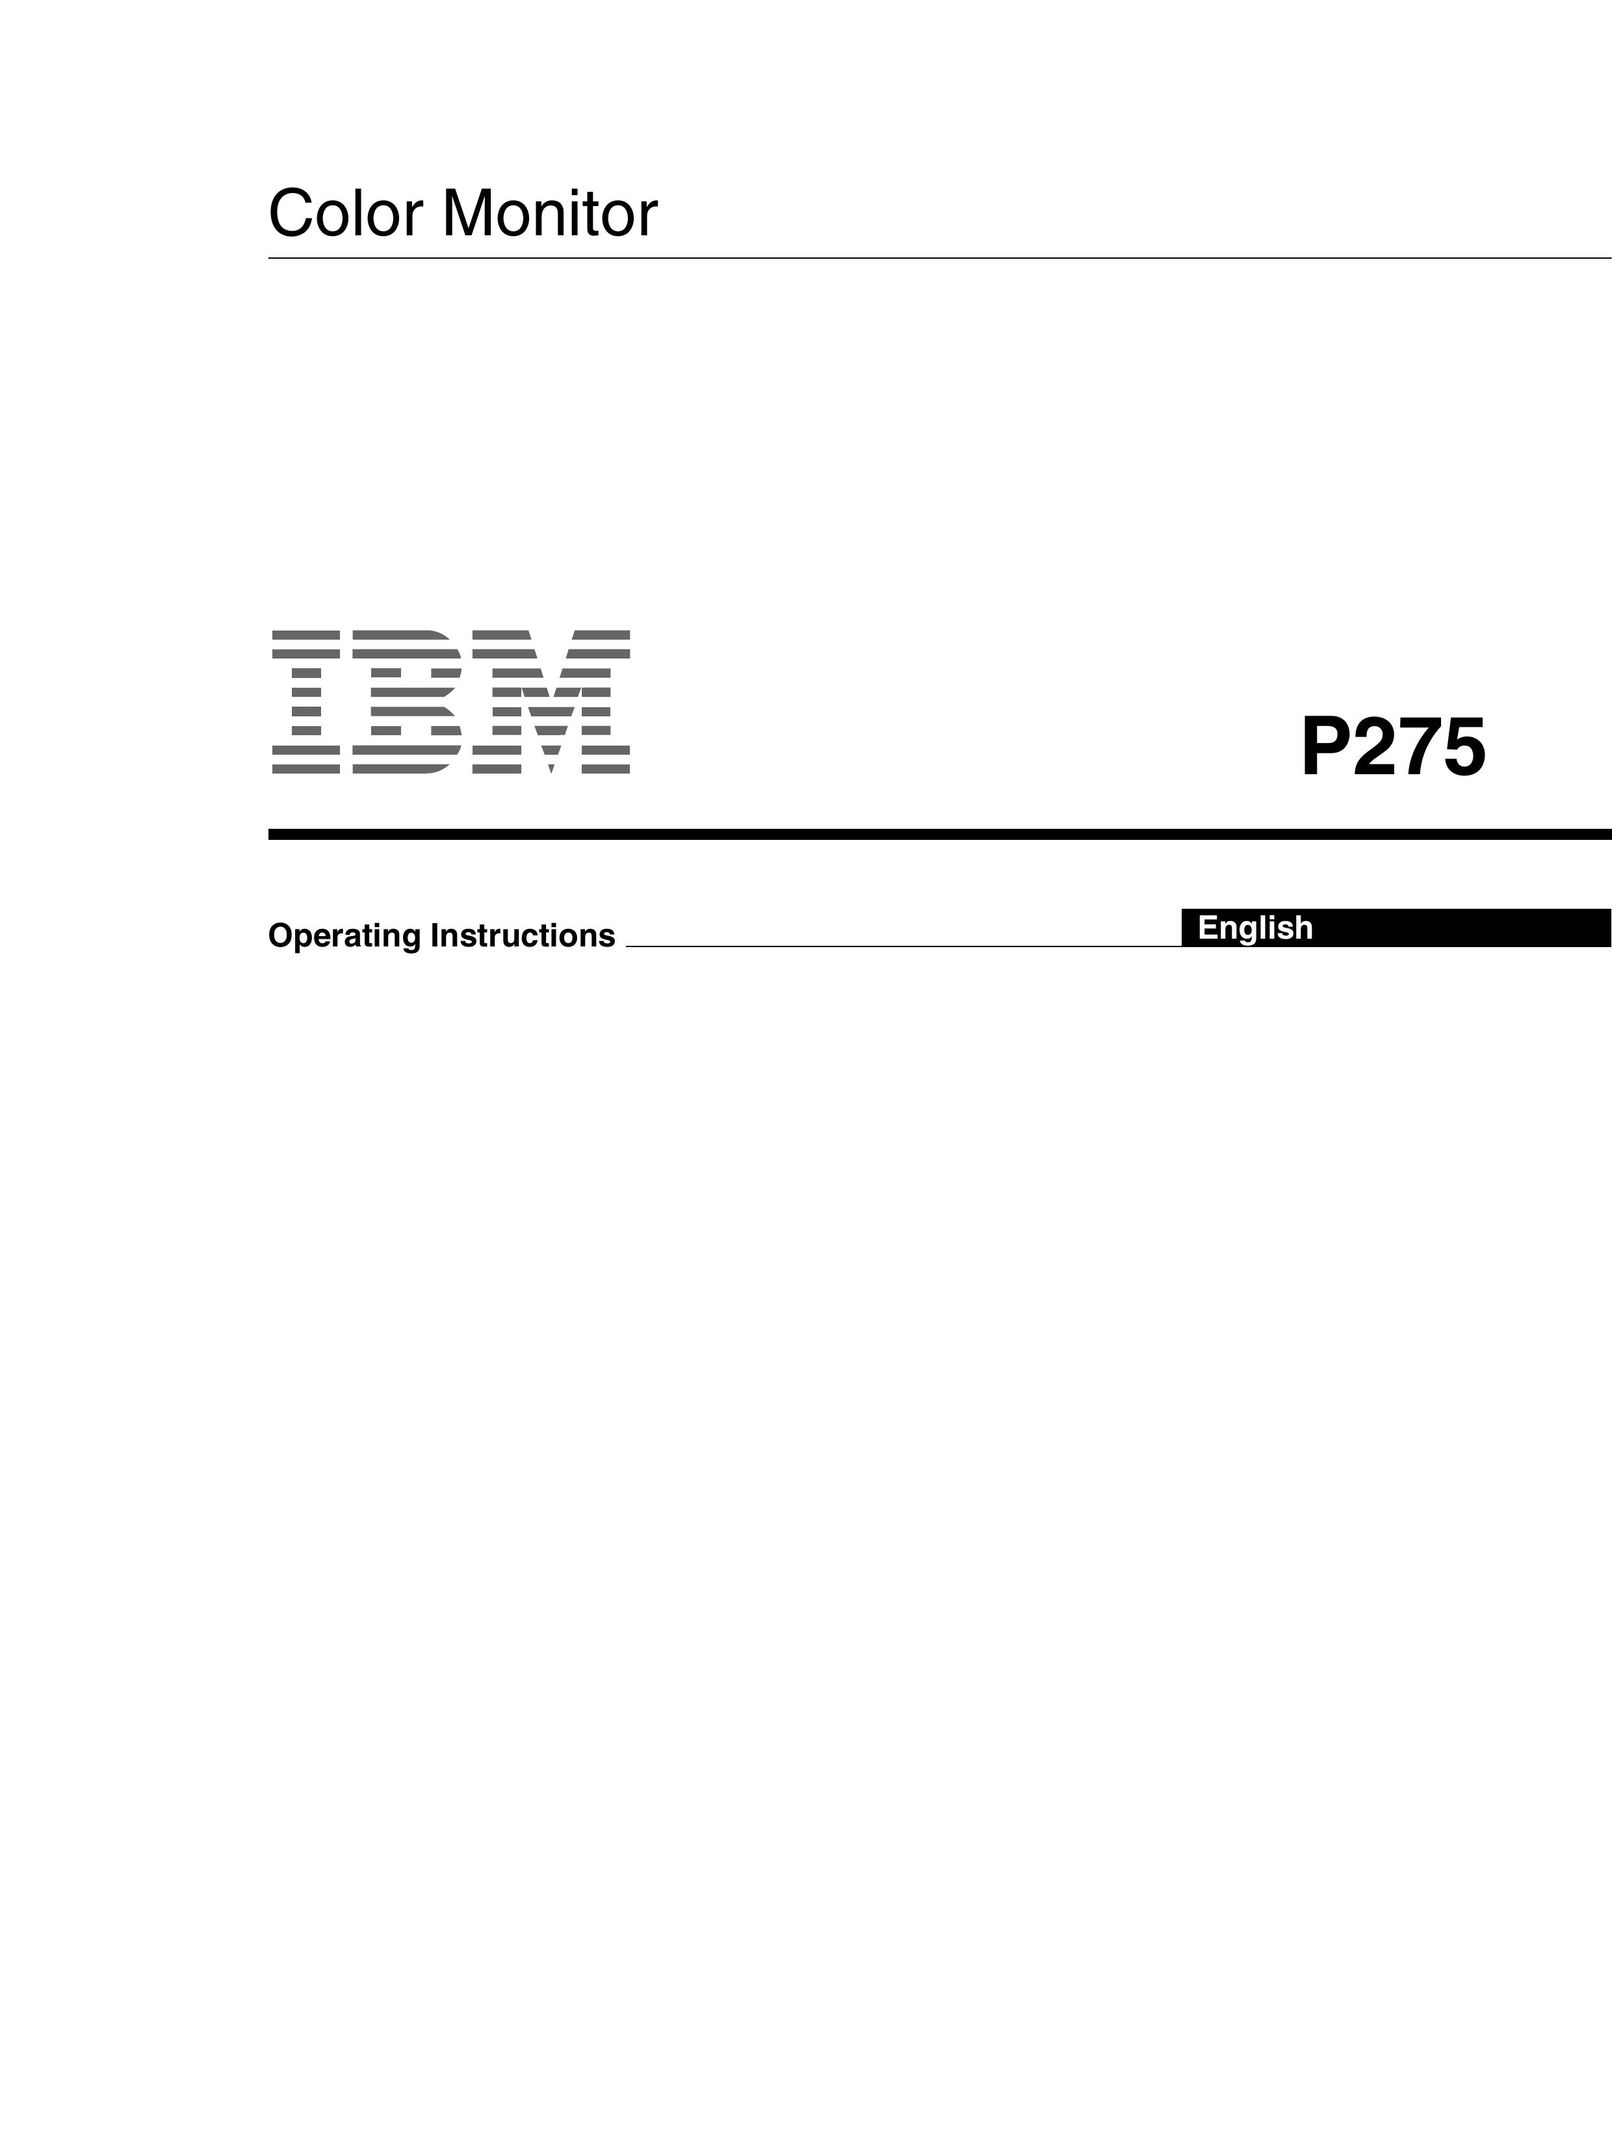 IBM P275 Car Stereo System User Manual